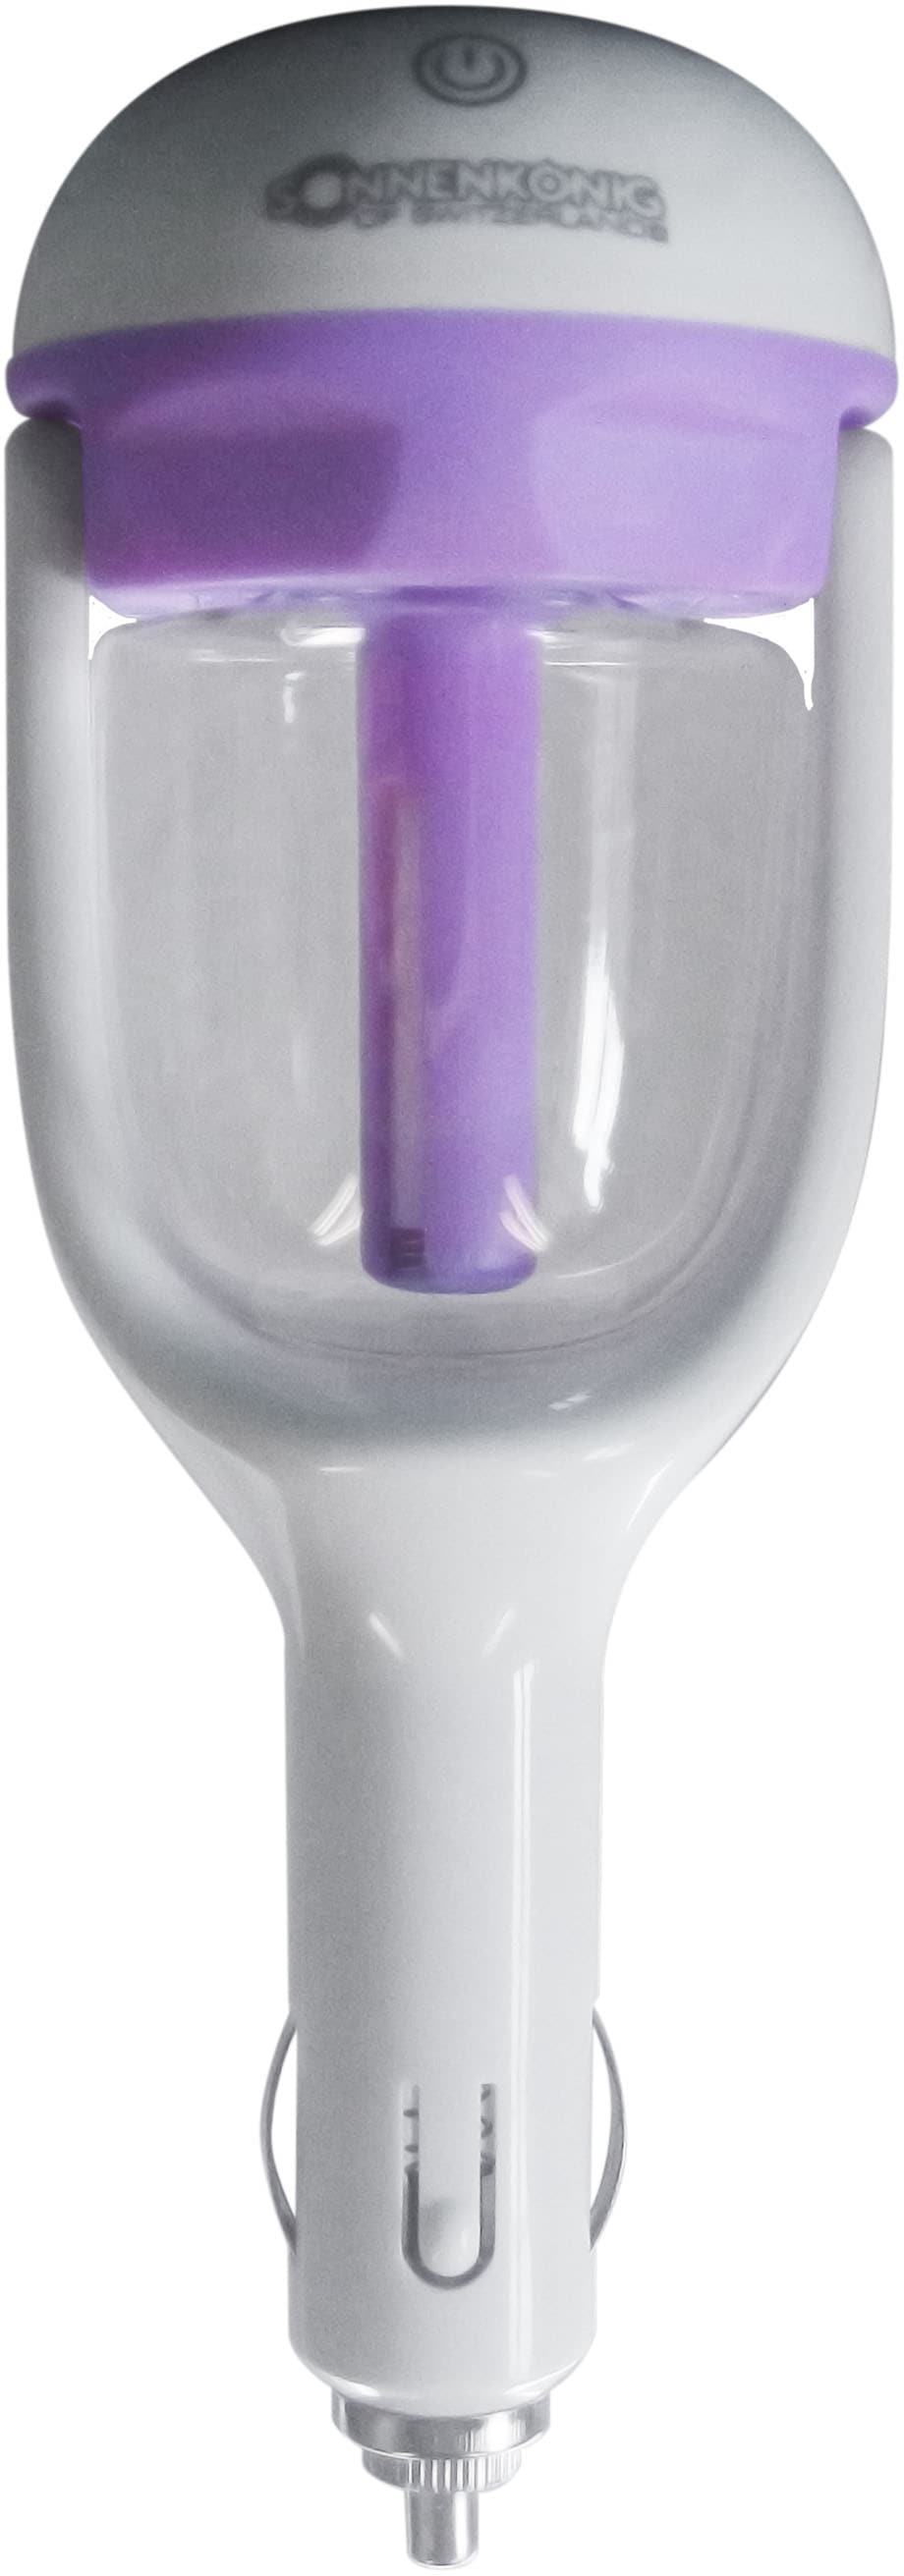 Sonnenkönig Luftbefeuchter »Freshcar lila«, 0,05 l Wassertank